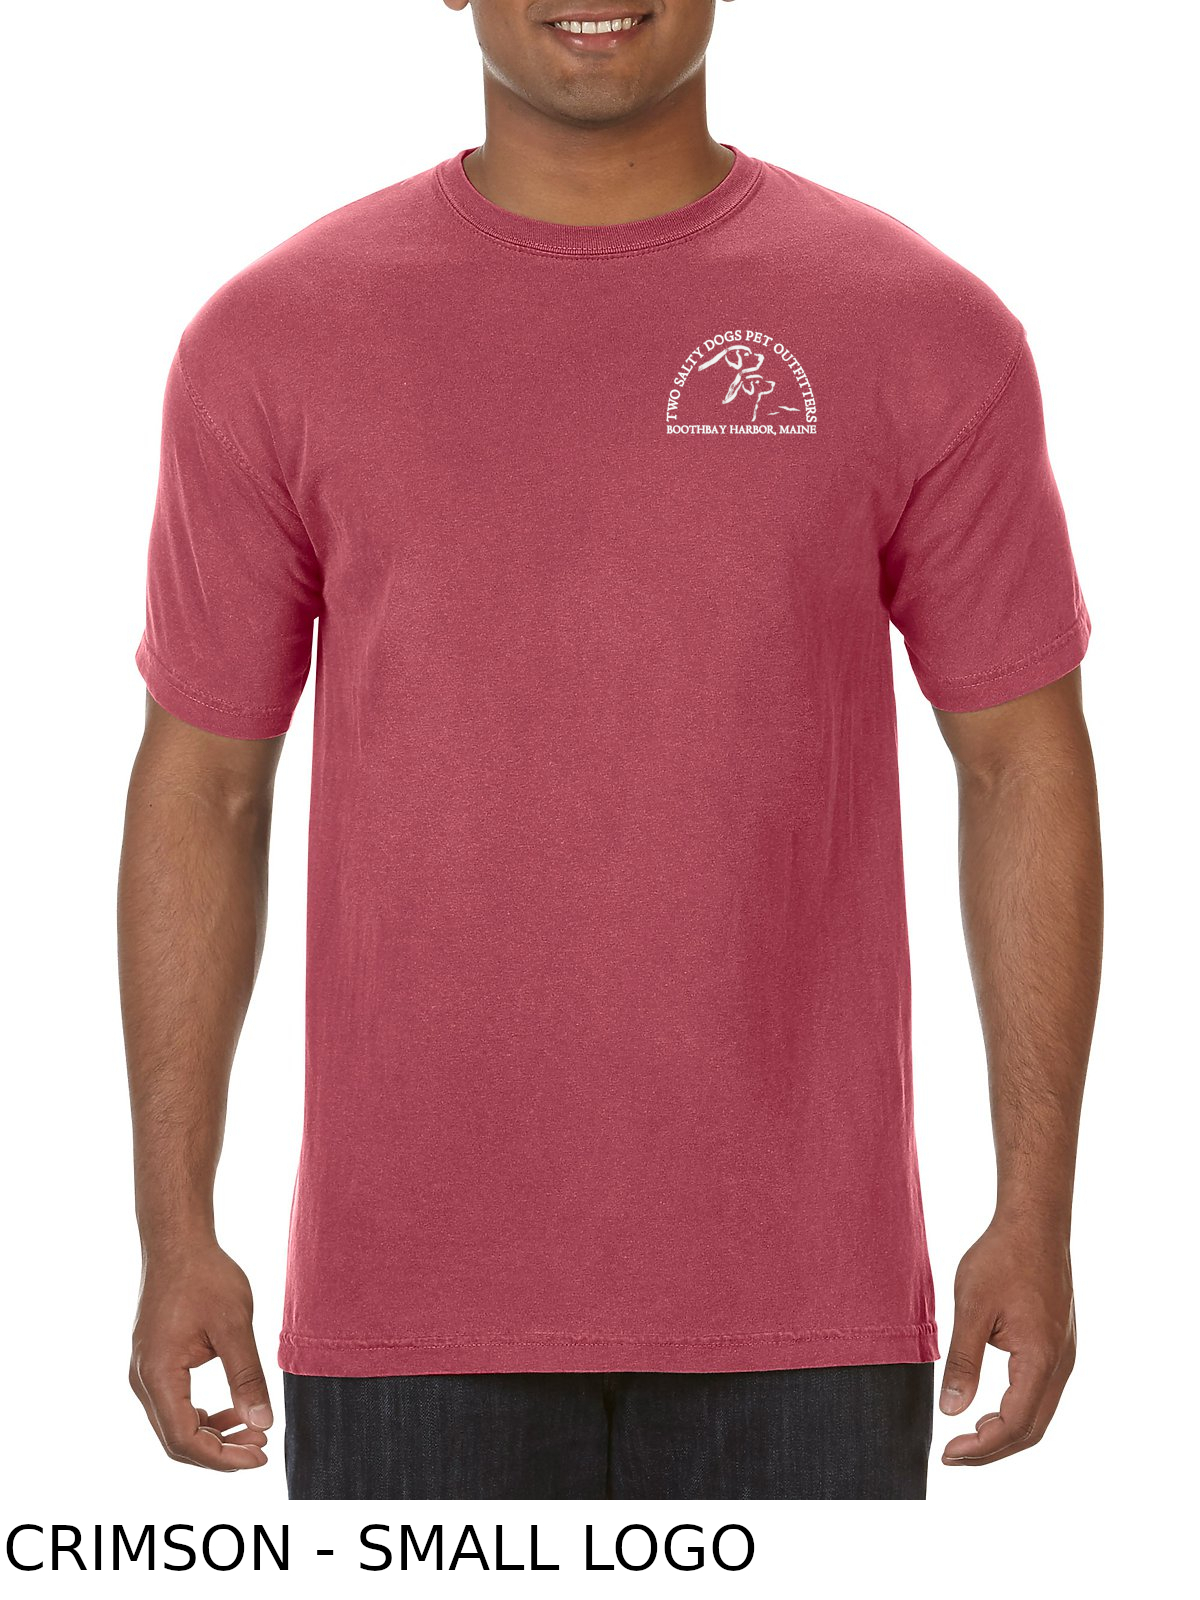 bbha-ss-t-shirt-no-pocket-crimson-front-small-logo